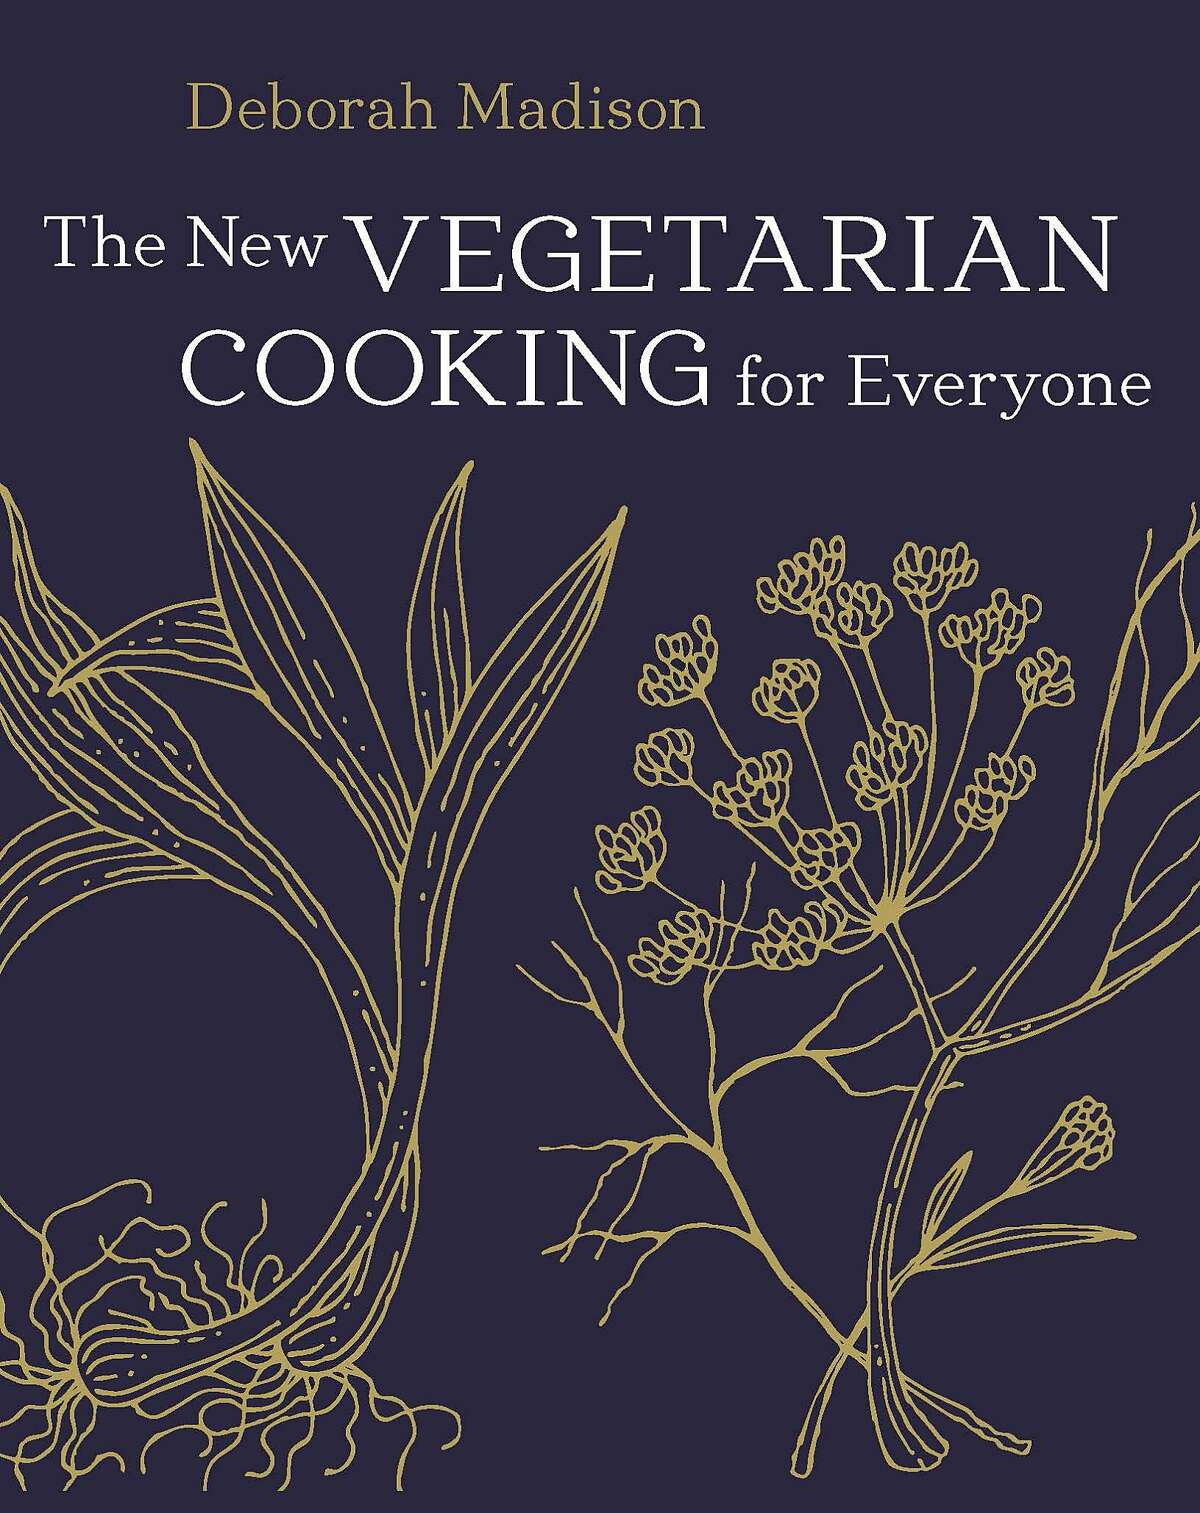 "Vegetarian Cooking for Everyone" by Deborah Madison